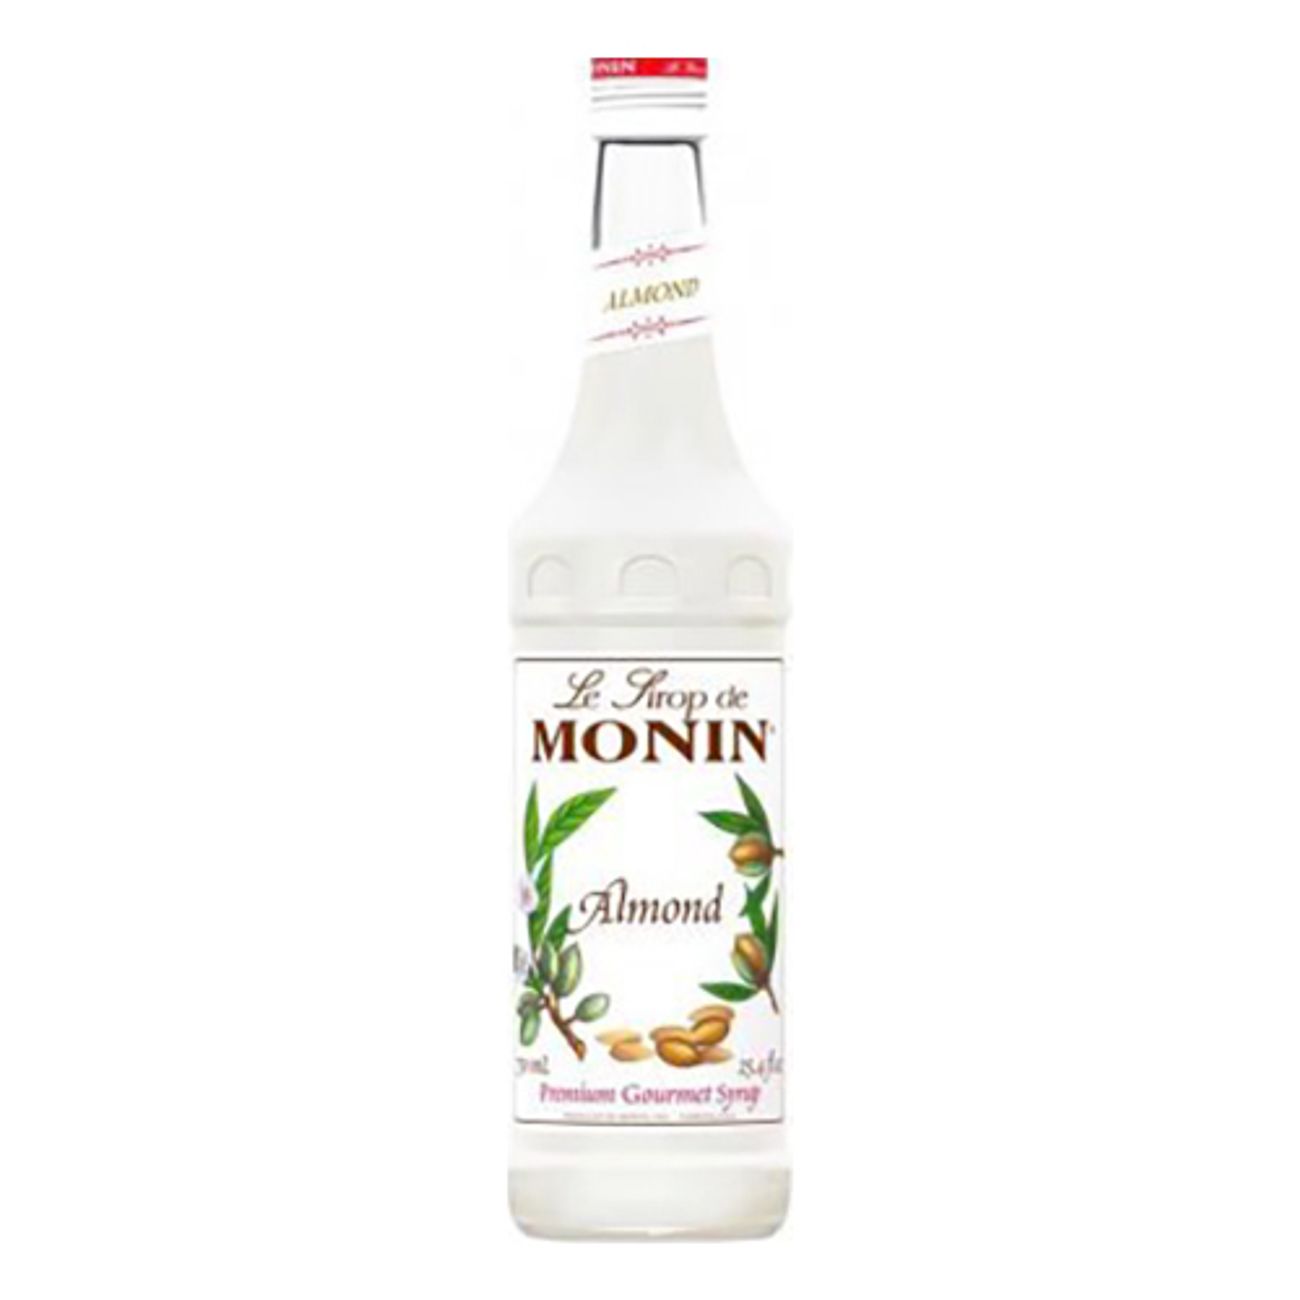 monin-orgeatalmond-drinkmix-1